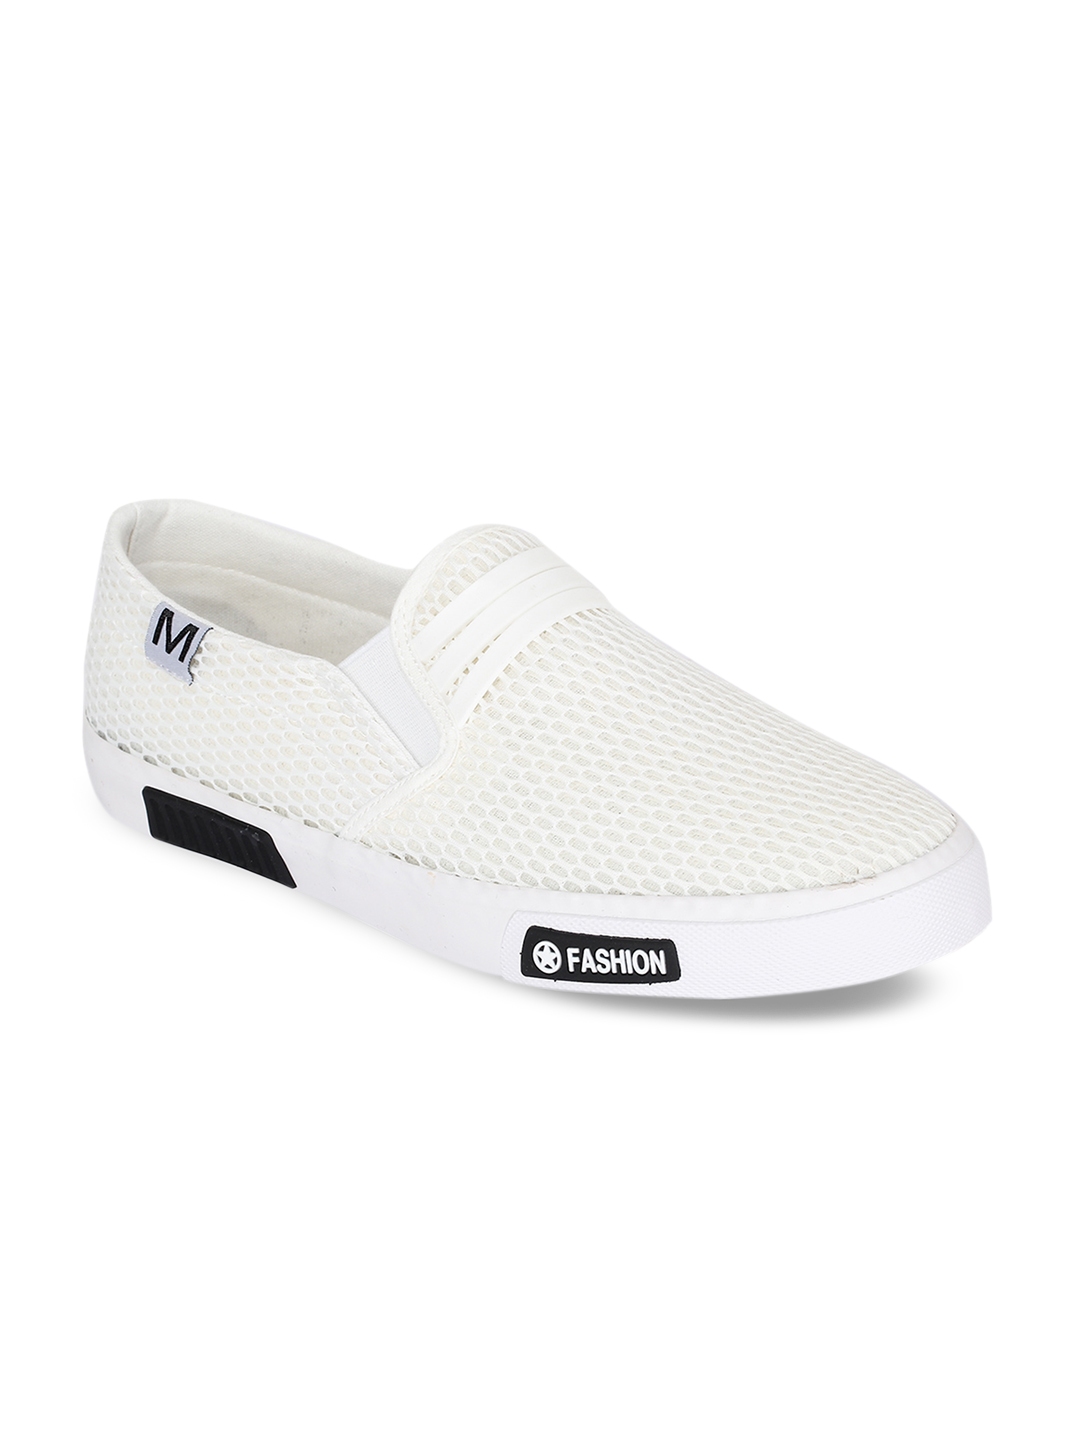 Buy REFOAM Men White Slip On Sneakers - Casual Shoes for Men 8531375 ...